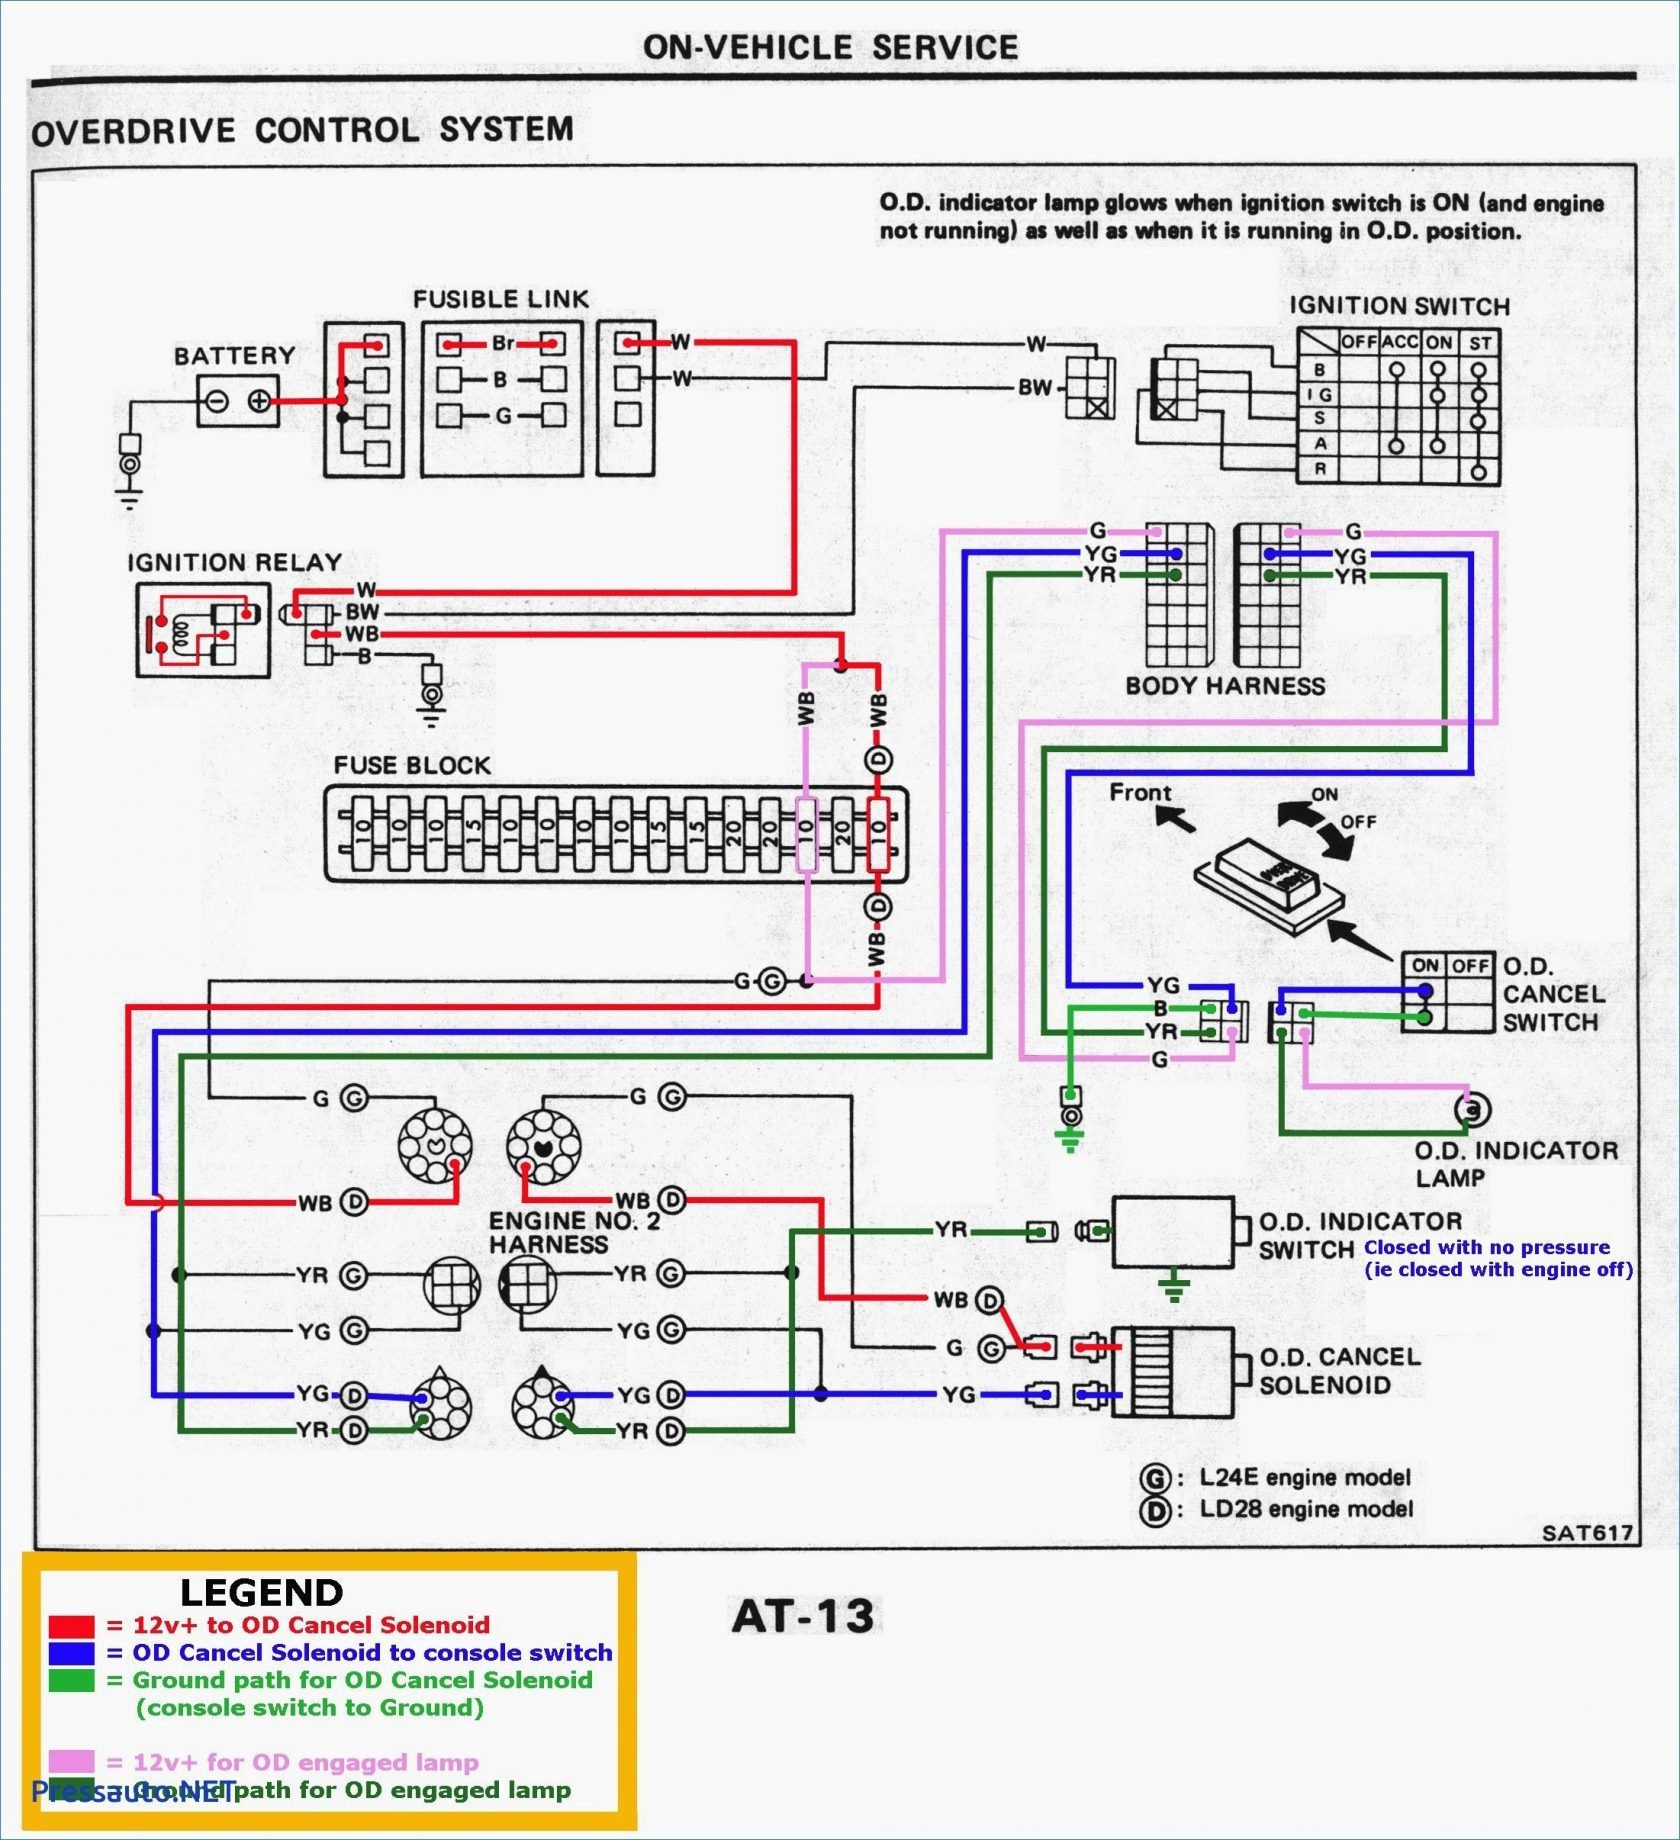 2002 Subaru Wrx Engine Diagram Freightliner Engine Diagram 2002 Automotive Wiring Diagrams Of 2002 Subaru Wrx Engine Diagram